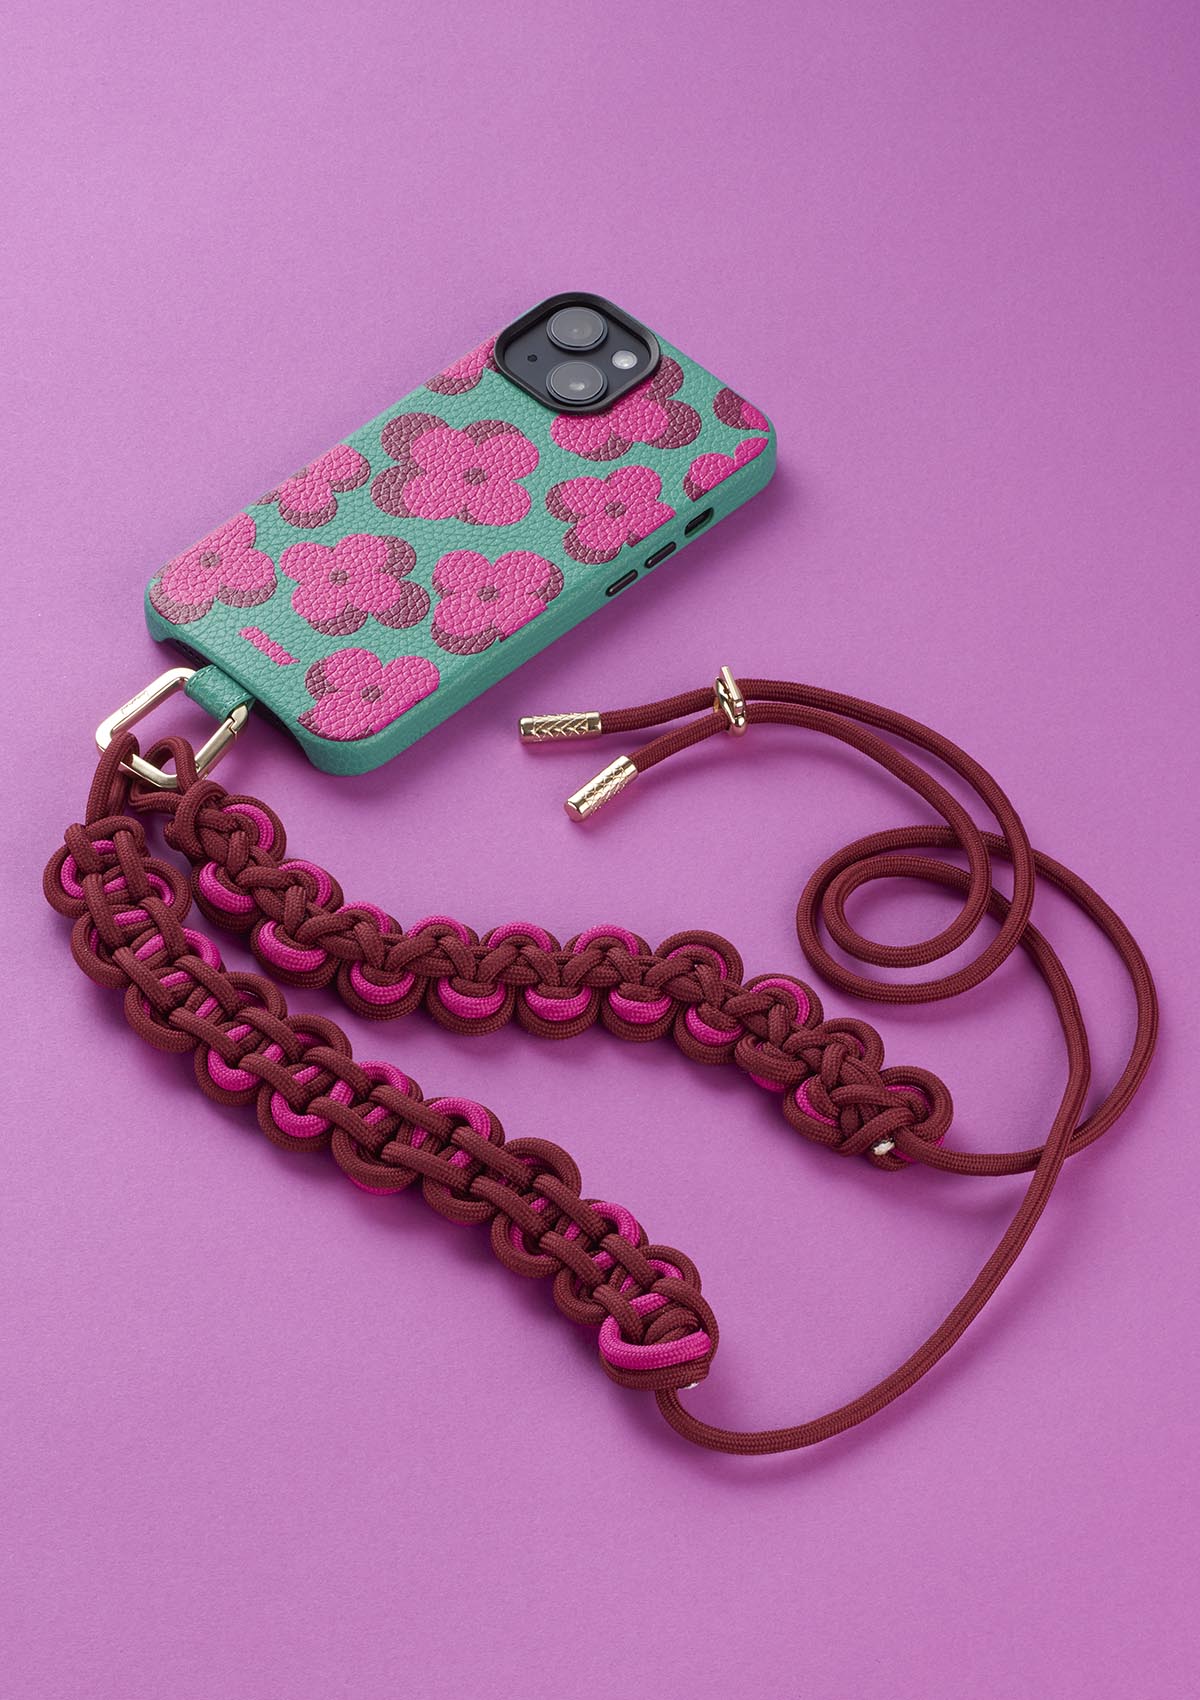 Phone Necklace Scoubidou regolabile bordeaux e rosa con Cover per iPhone con i fiori verde